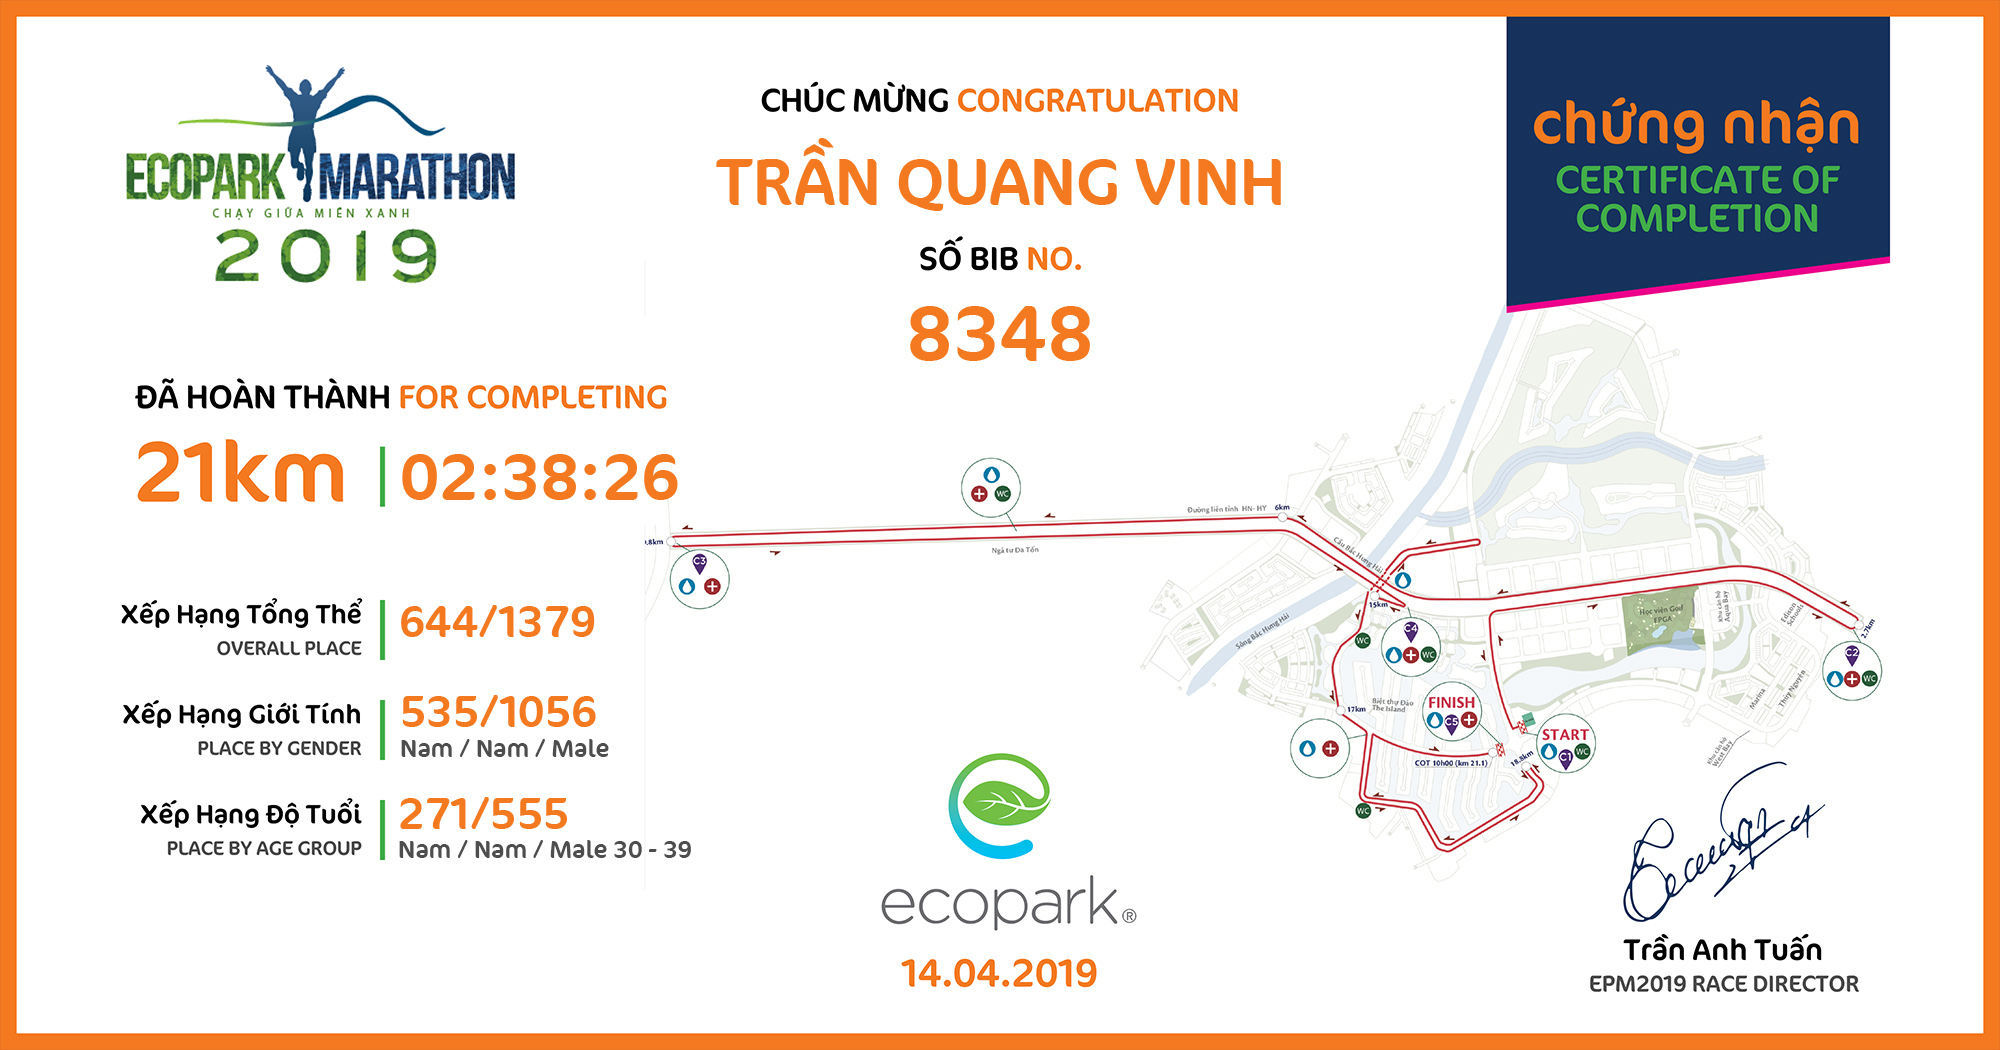 8348 - Trần Quang Vinh